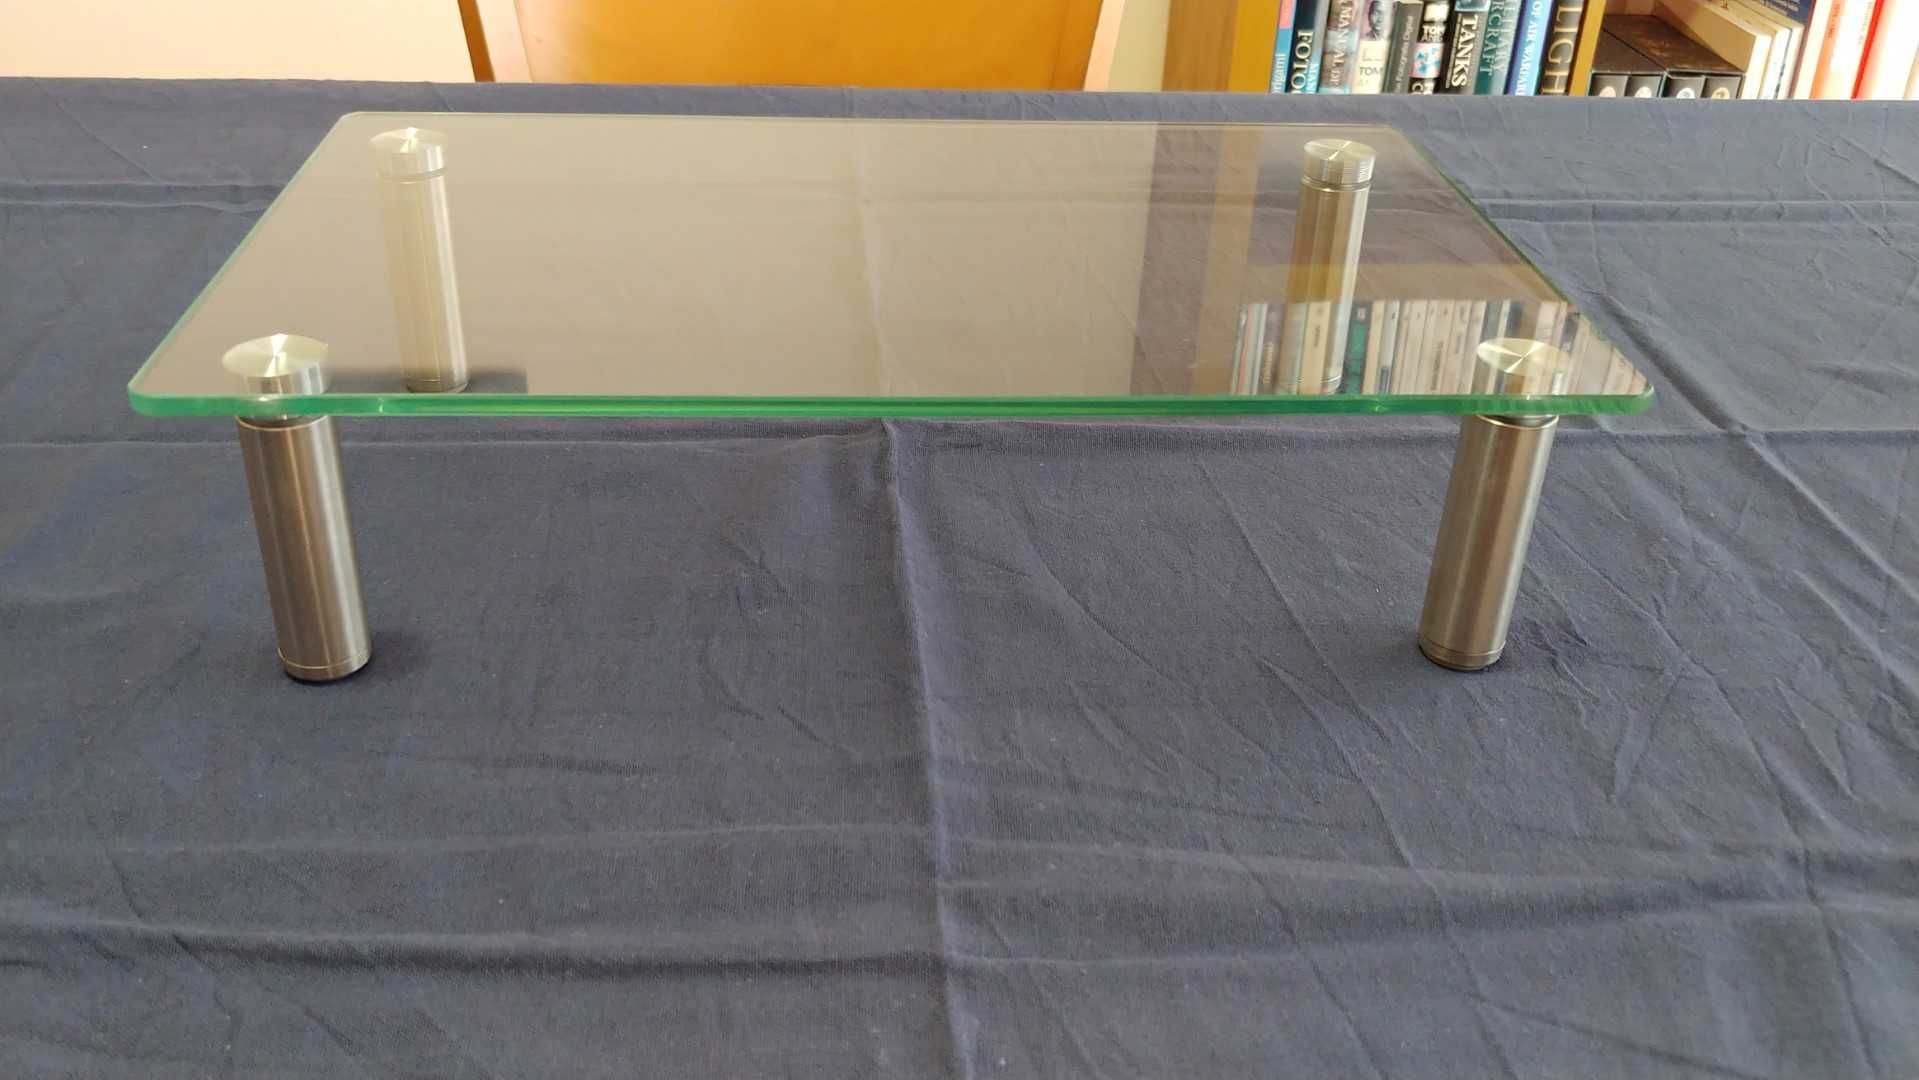 Novo Suporte/Mesa de vidro para monitor 39 x 24 x 9.5 - 11.5 cm